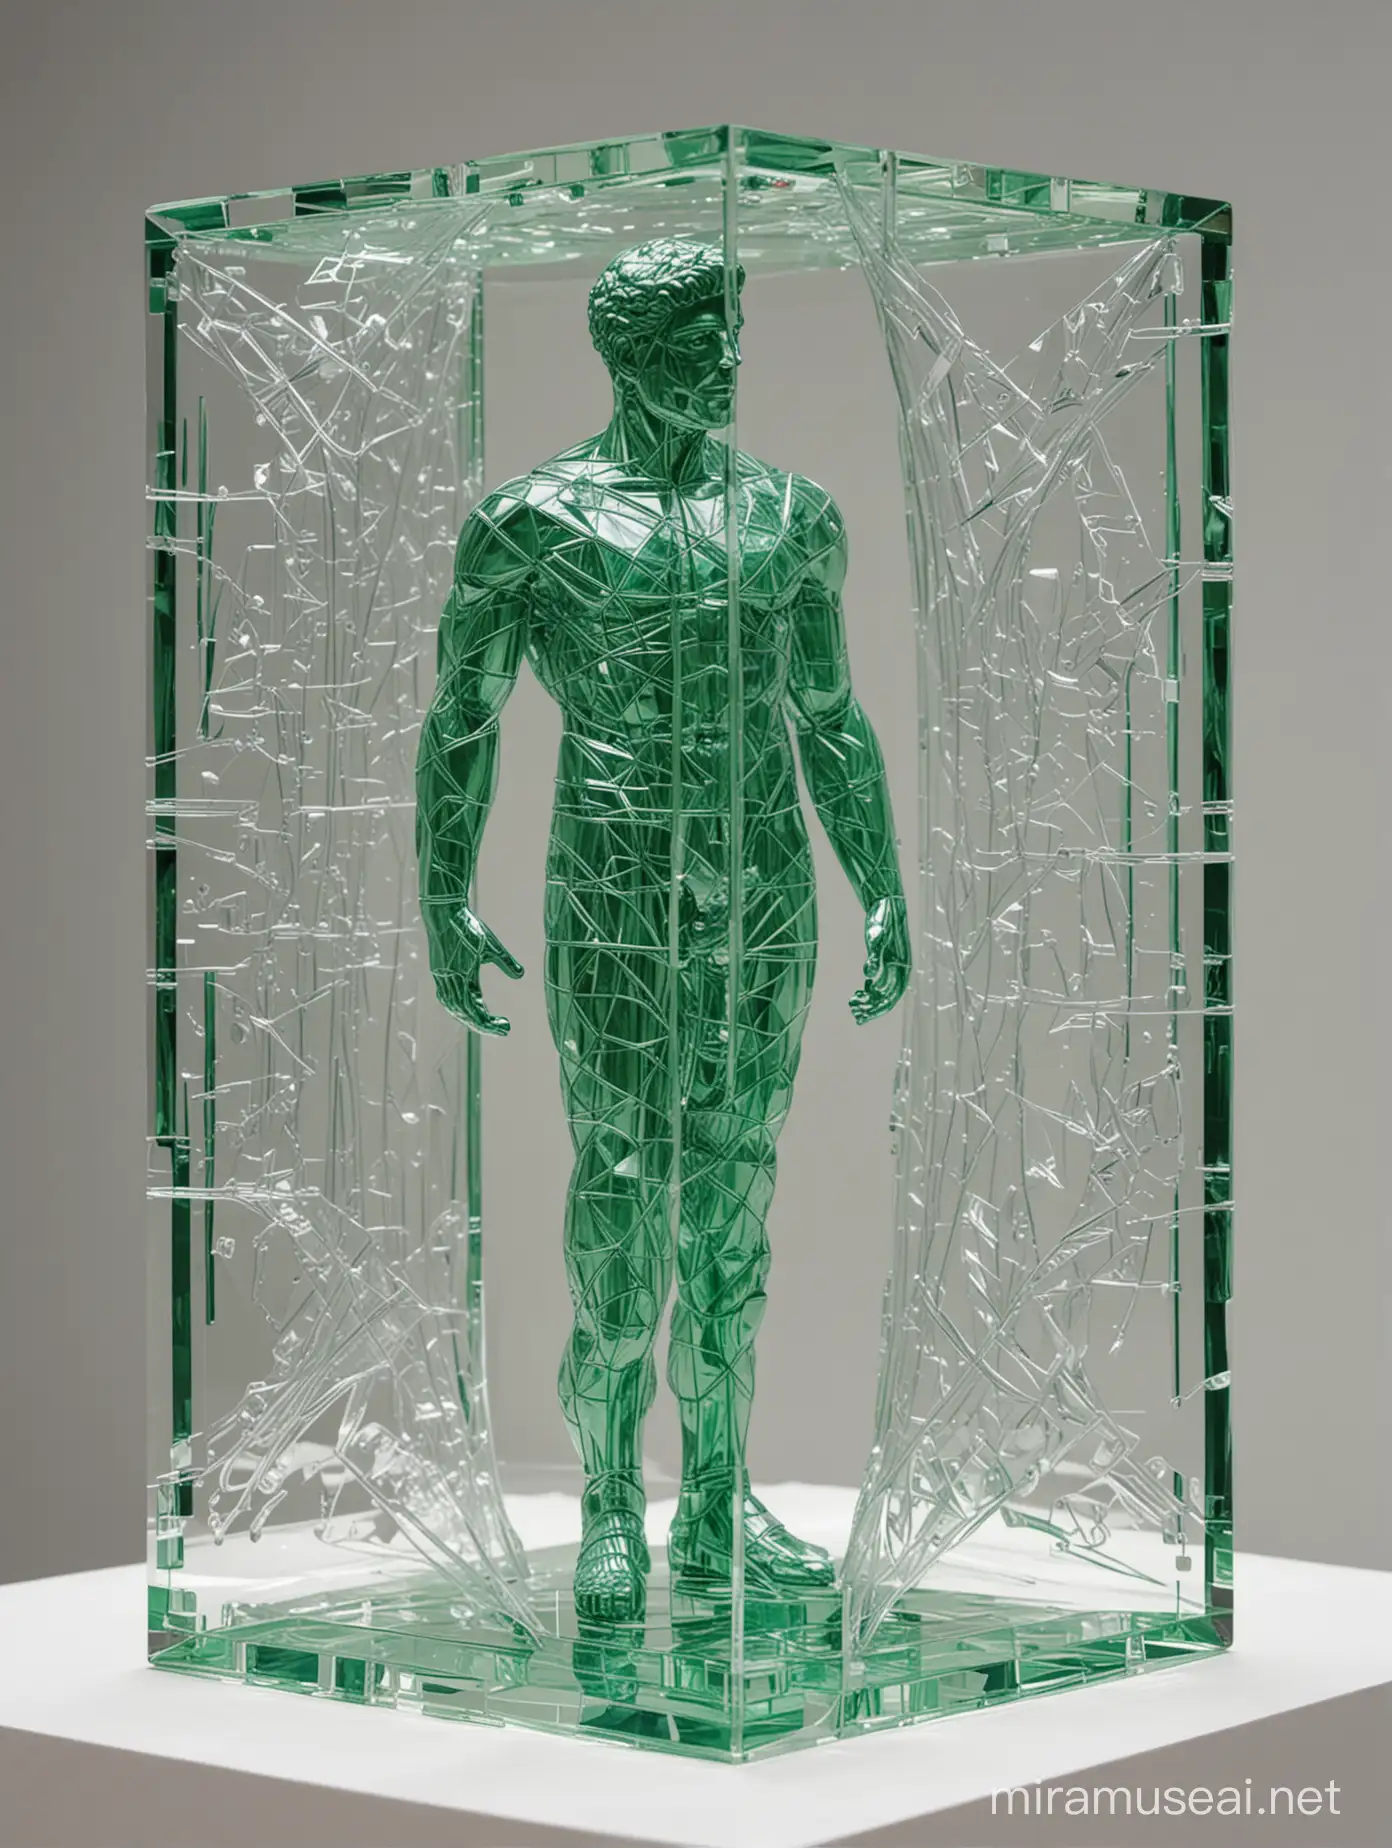 geometric designs in transparent plastic green hues minimalist plastic sculpture in modern art museum intricate union of plastic pieces Renaissance postmodernism Apollo and David male